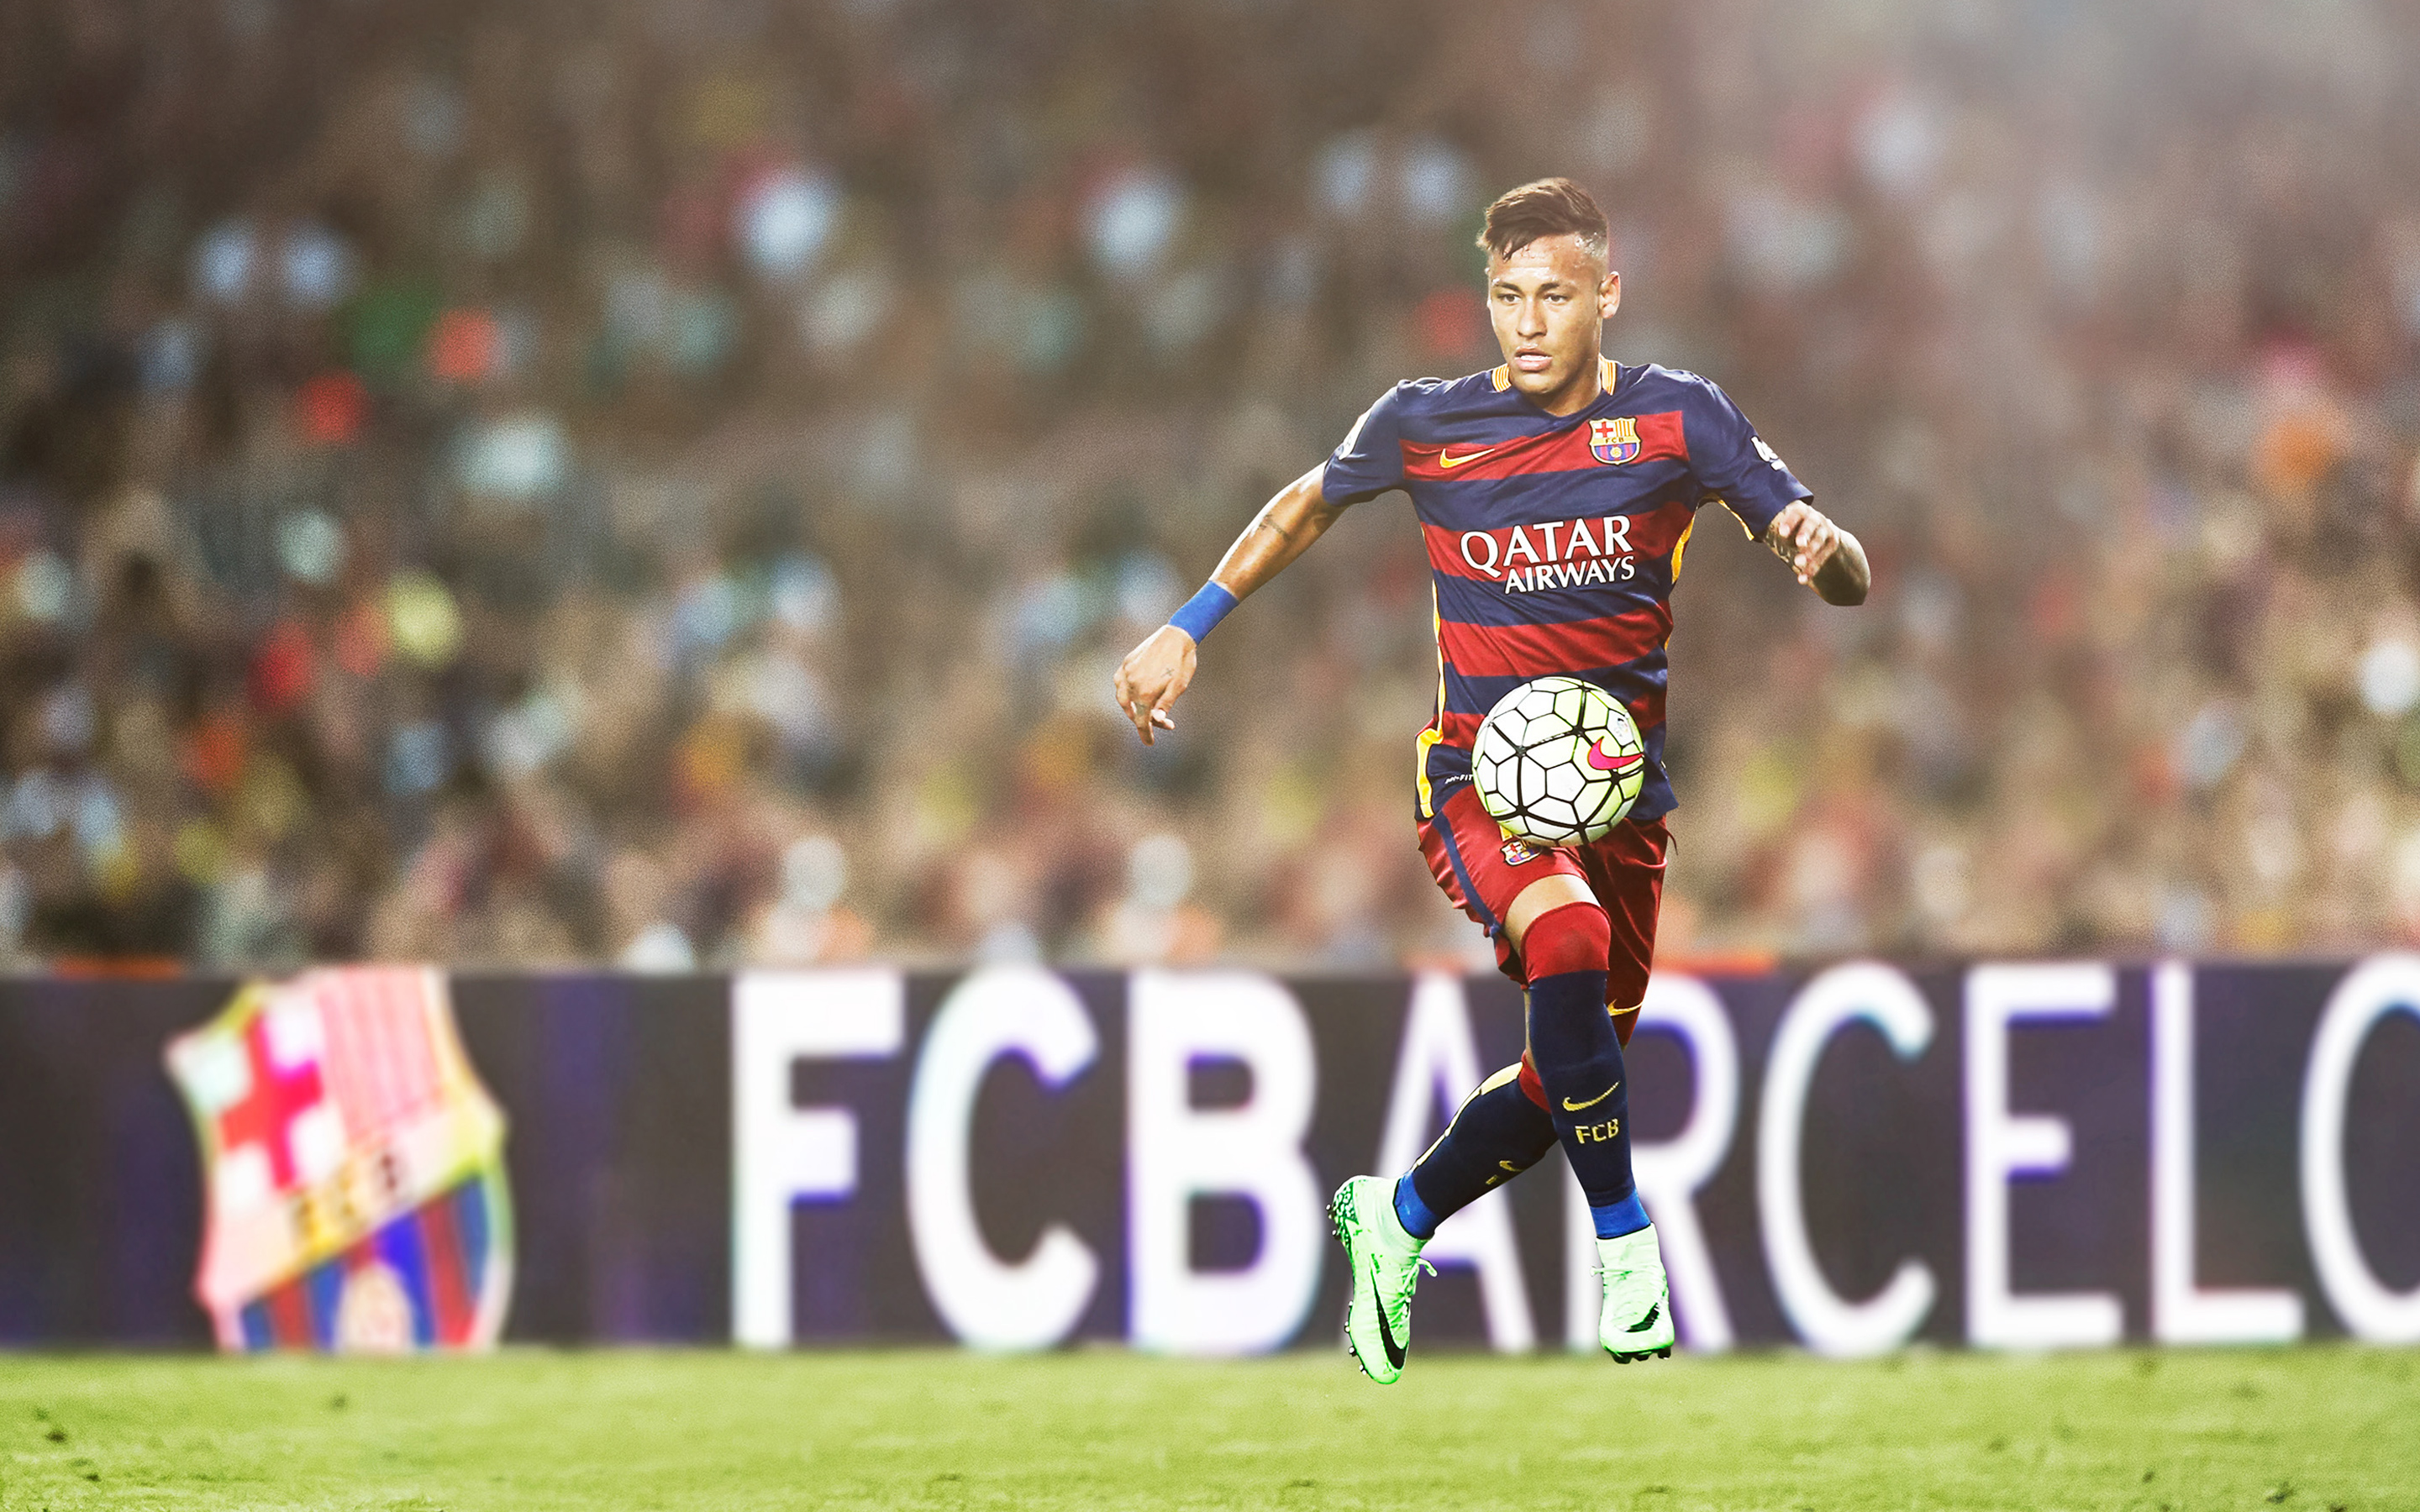 Neymar FC Barcelona HD